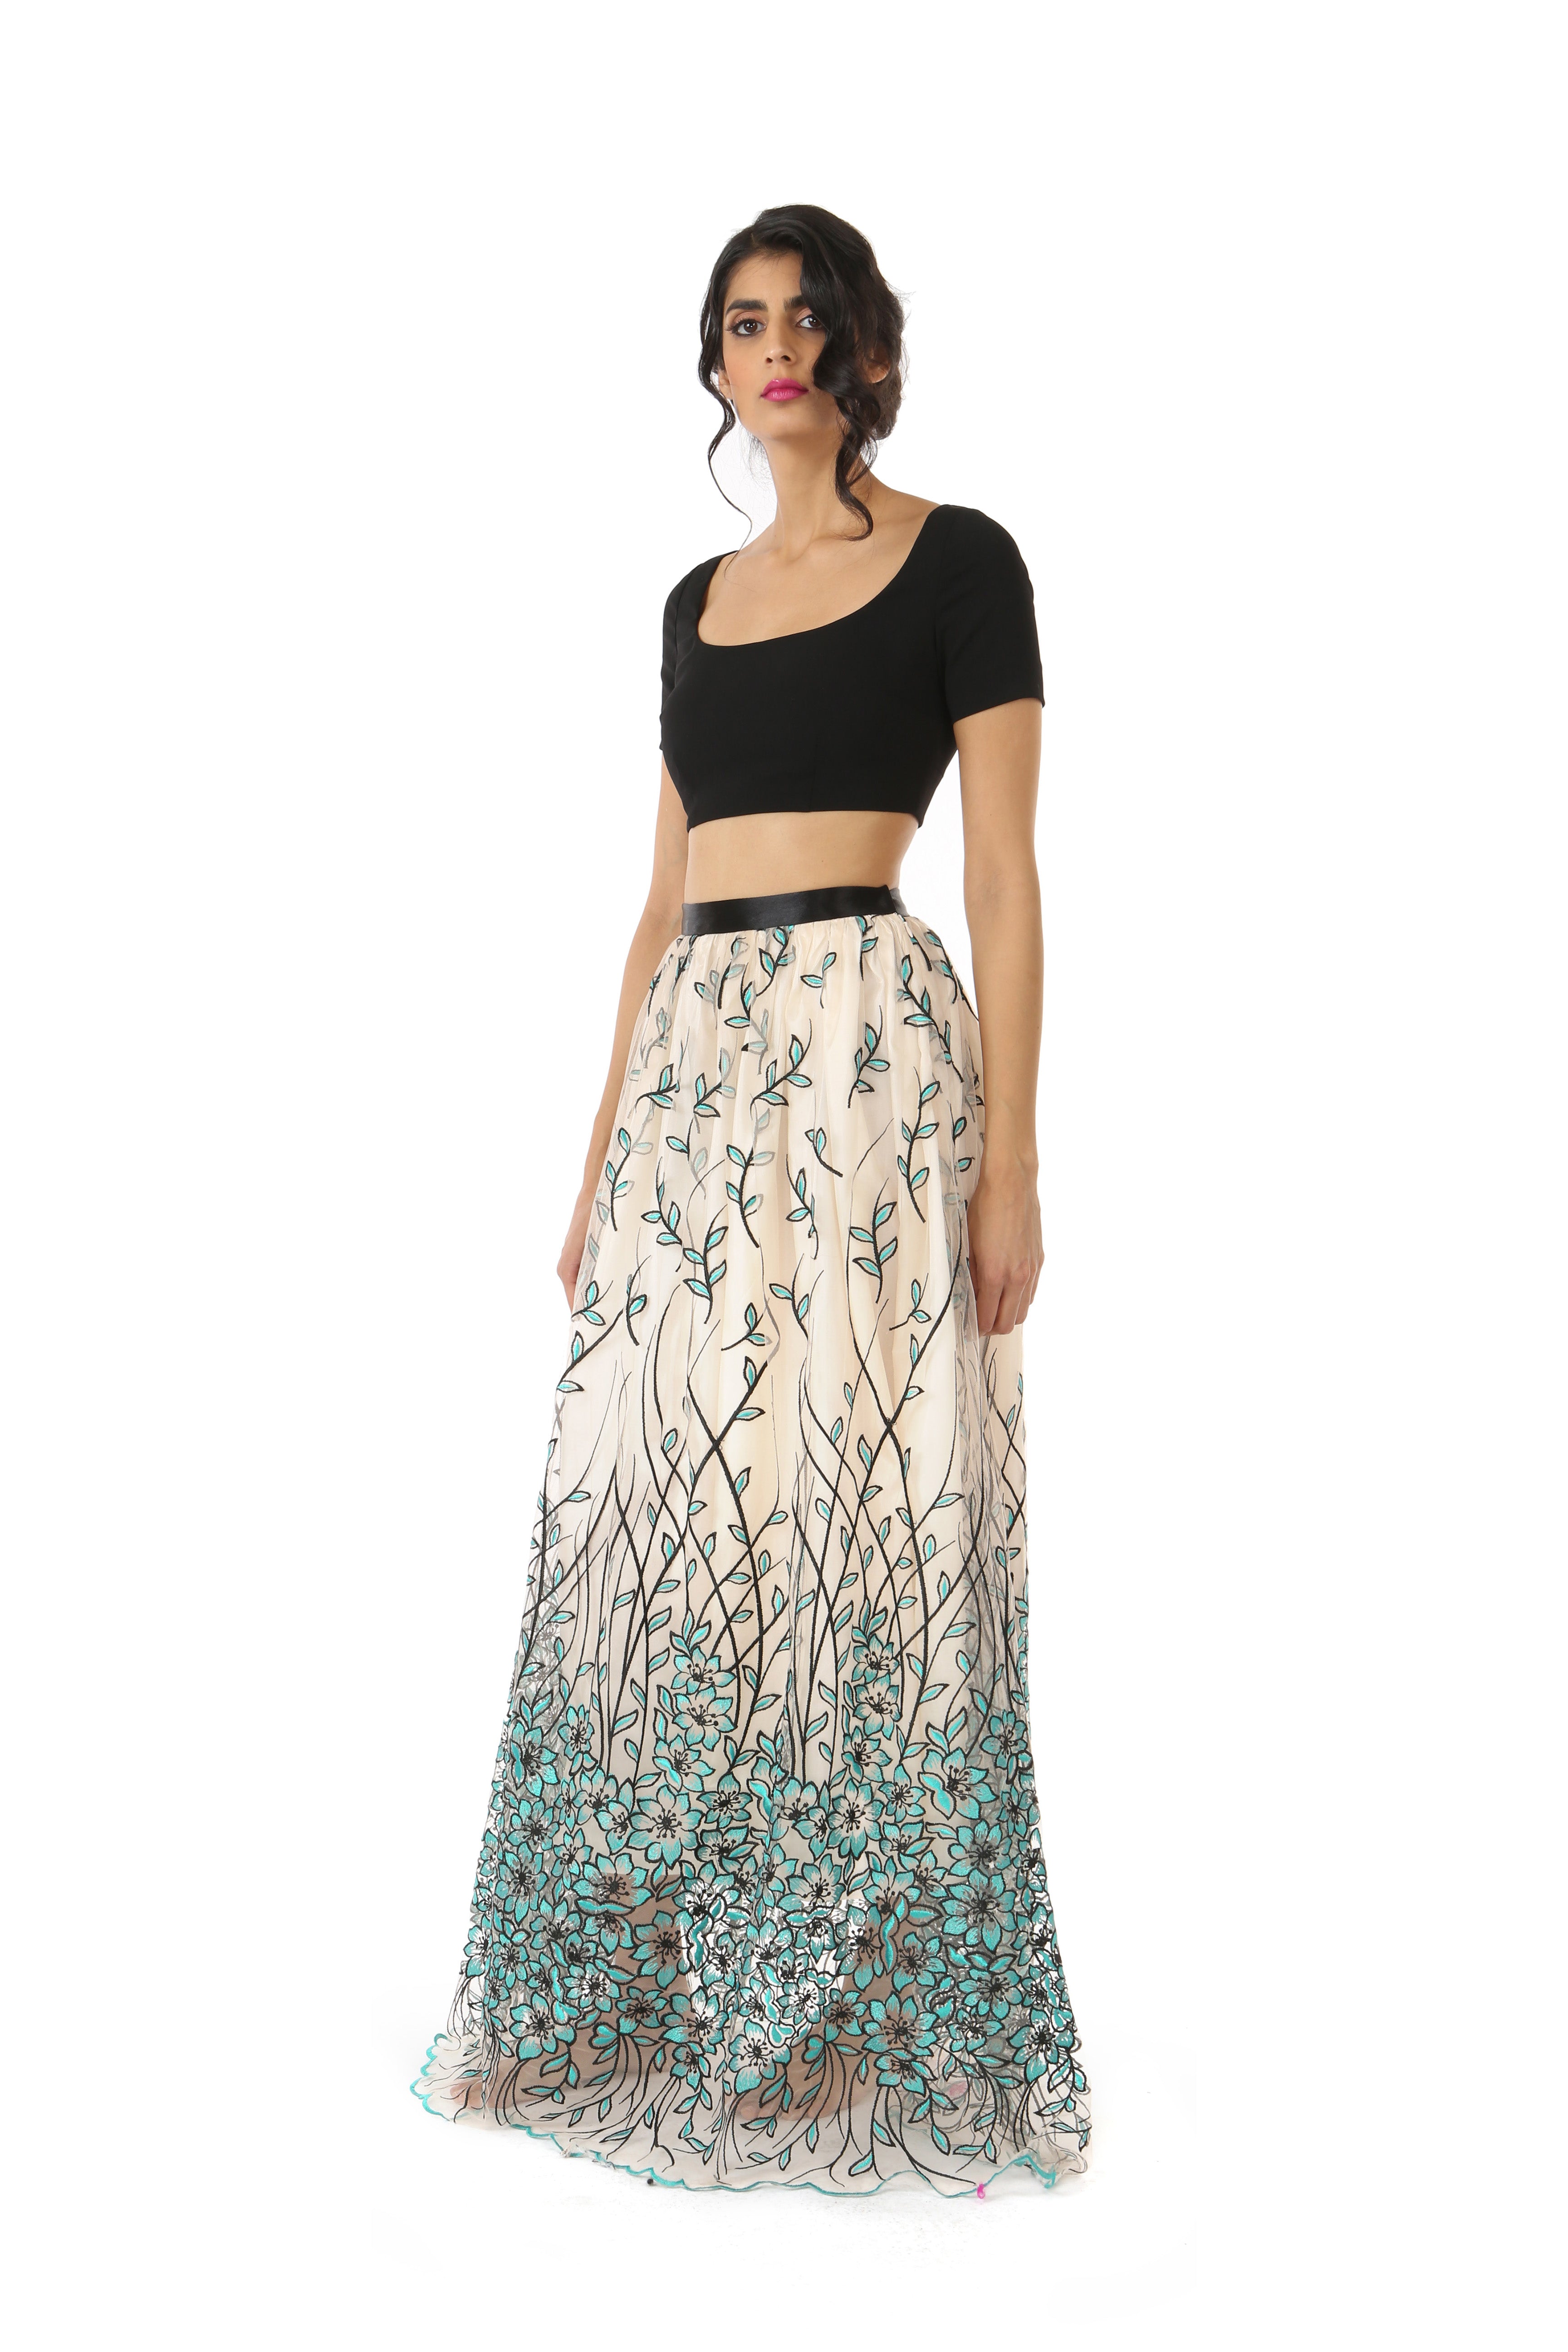 CLASSICS FTW | Simple lehenga, Long skirt and top, Crop top lehenga